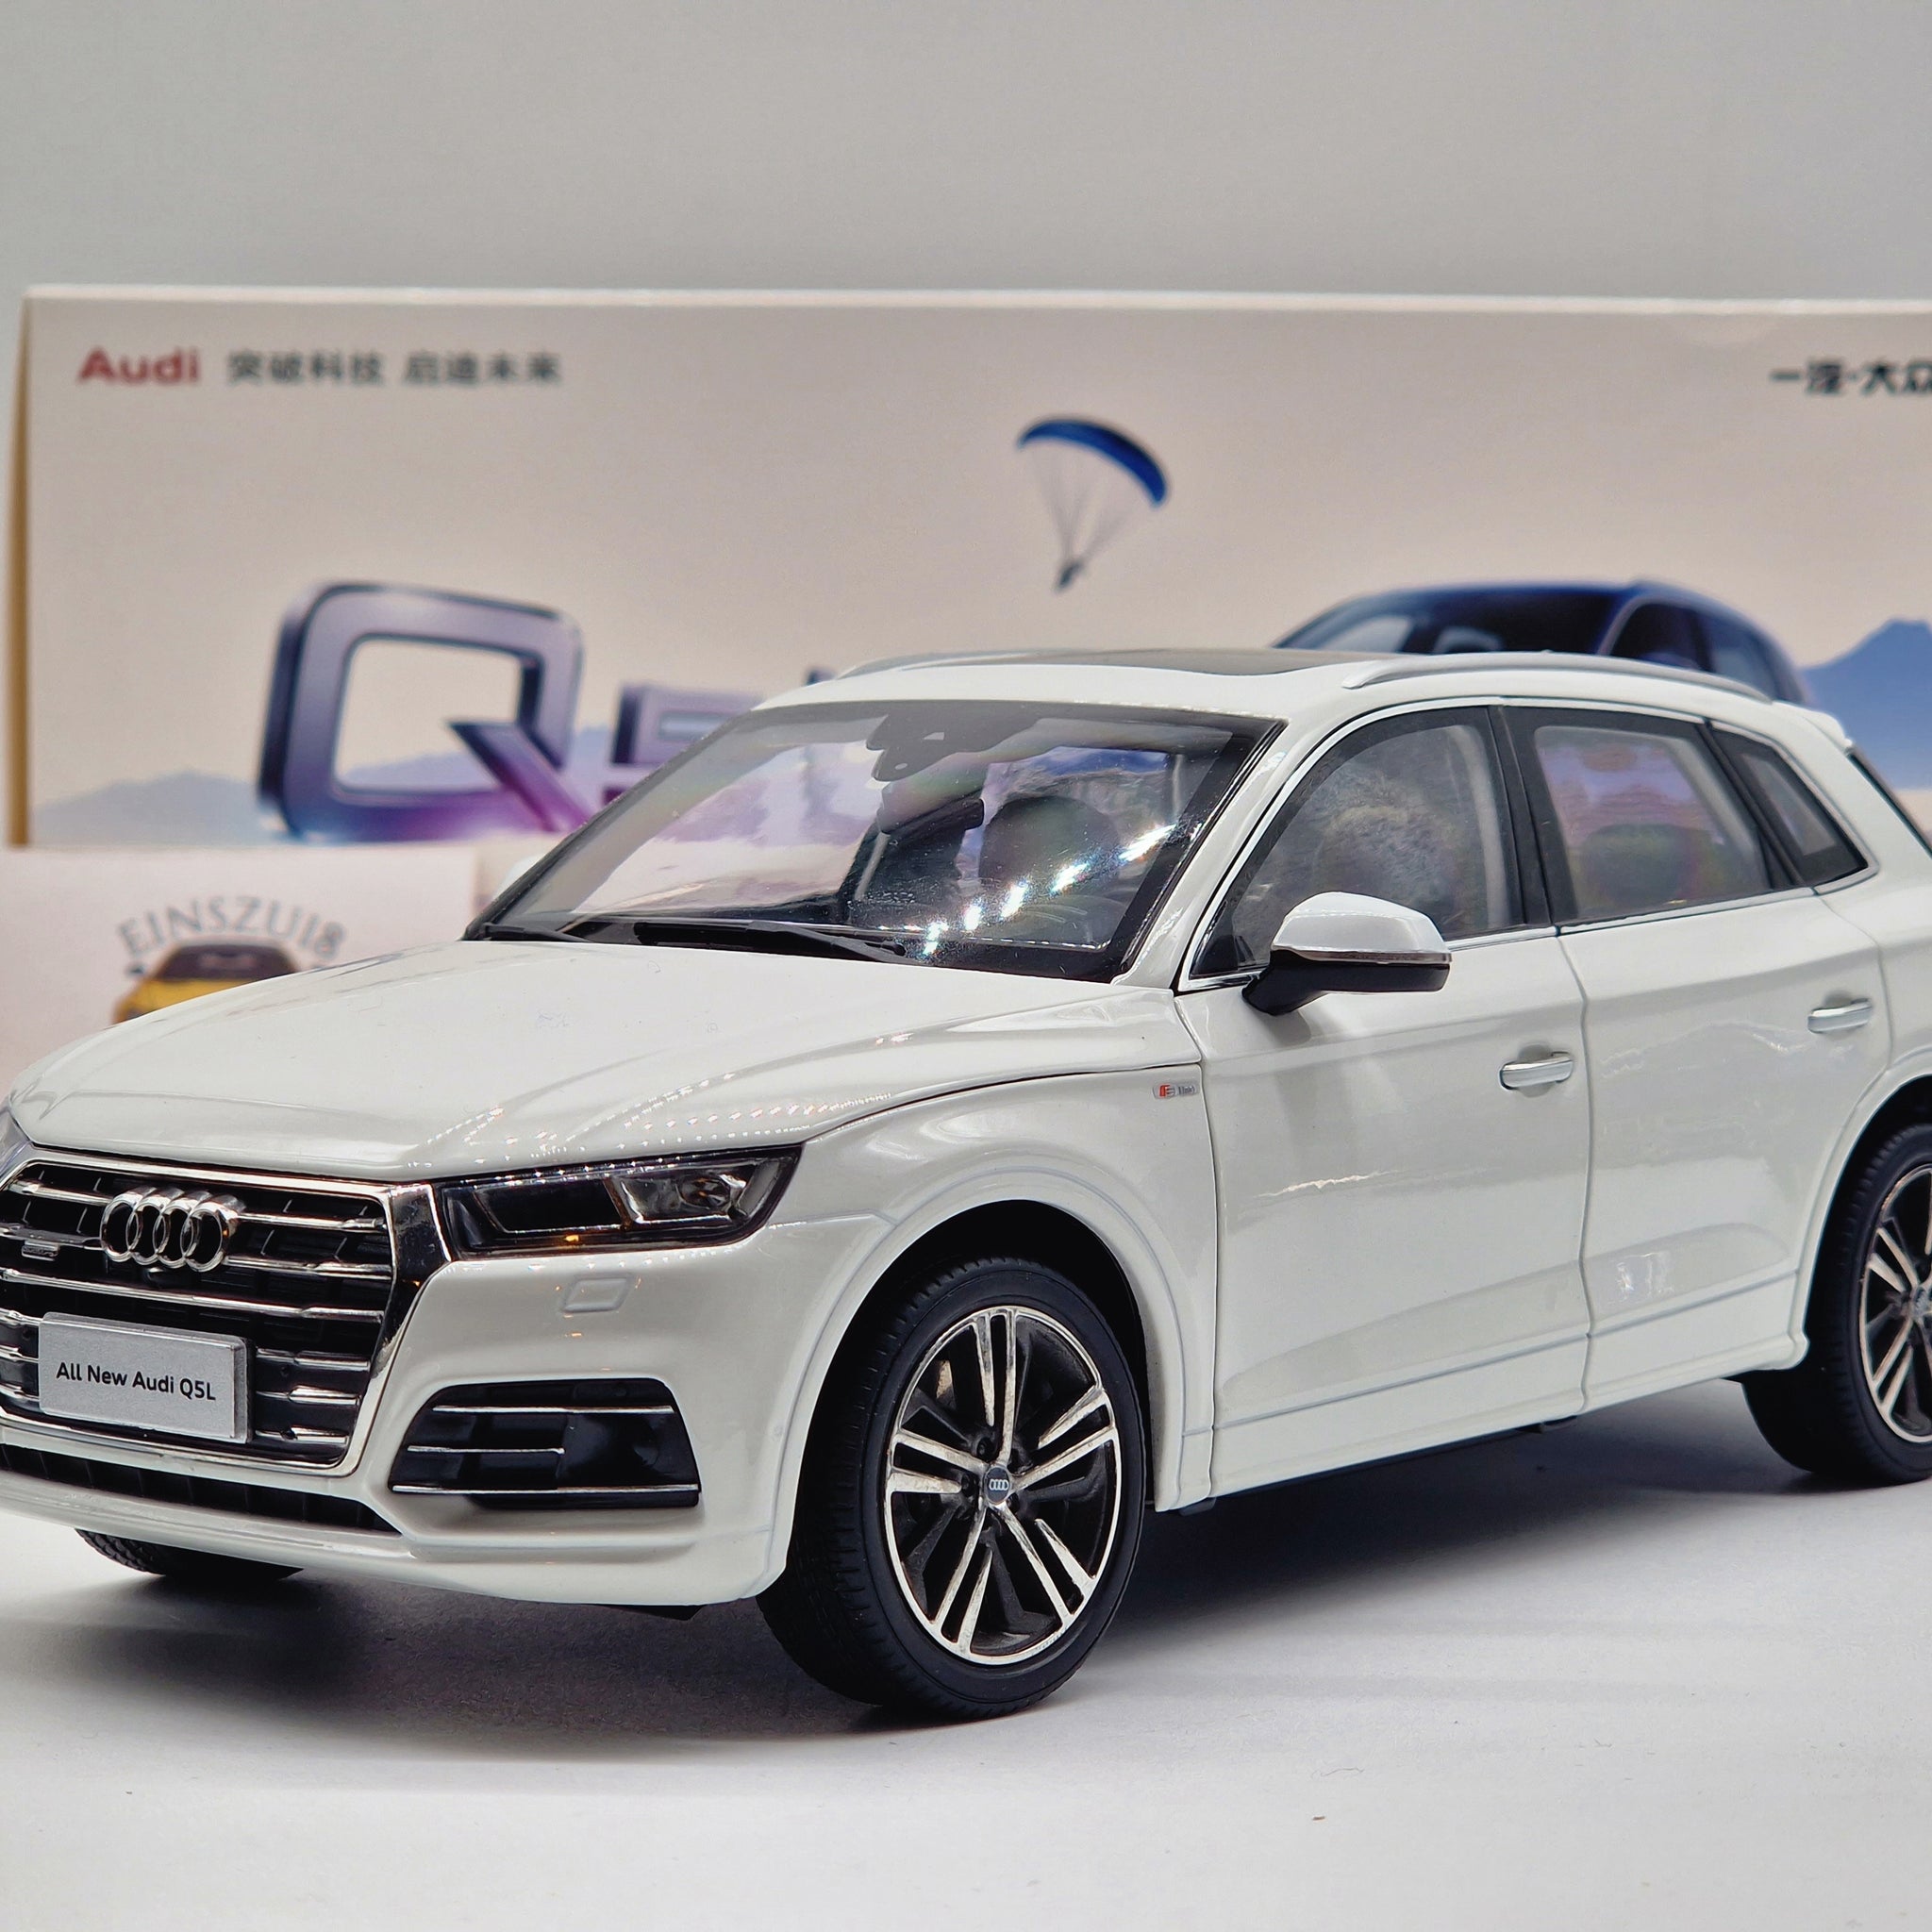 Audi Q5L 45 TFSI 2018 White (Asia Exclusive)